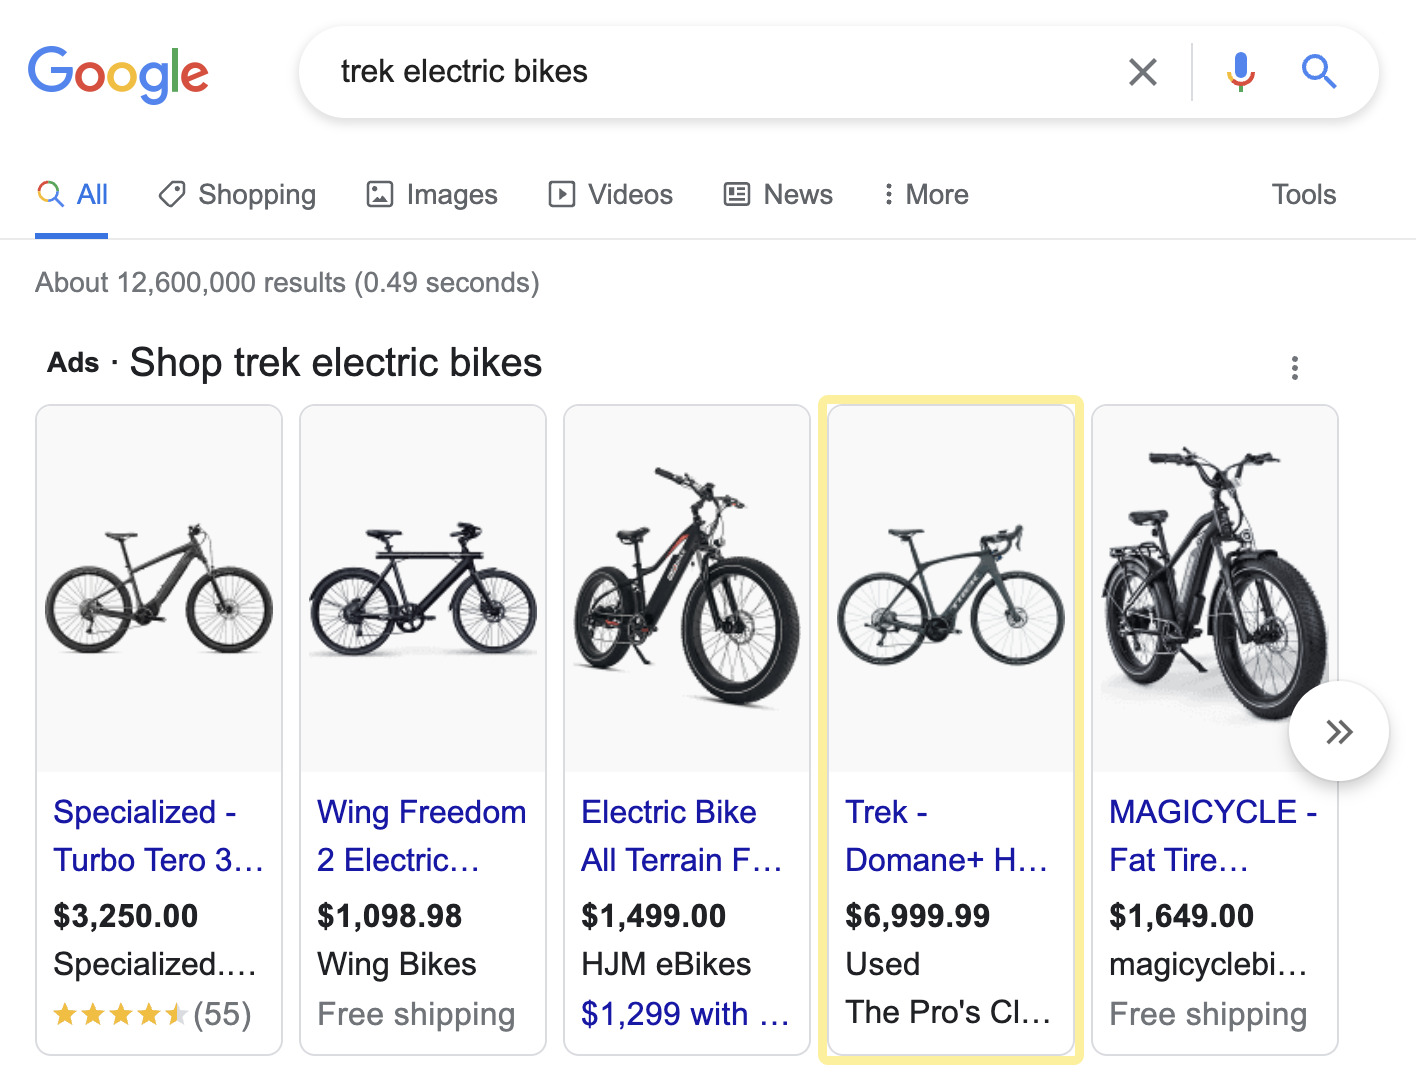 Ads on Google SERP for "trek electric bikes" 